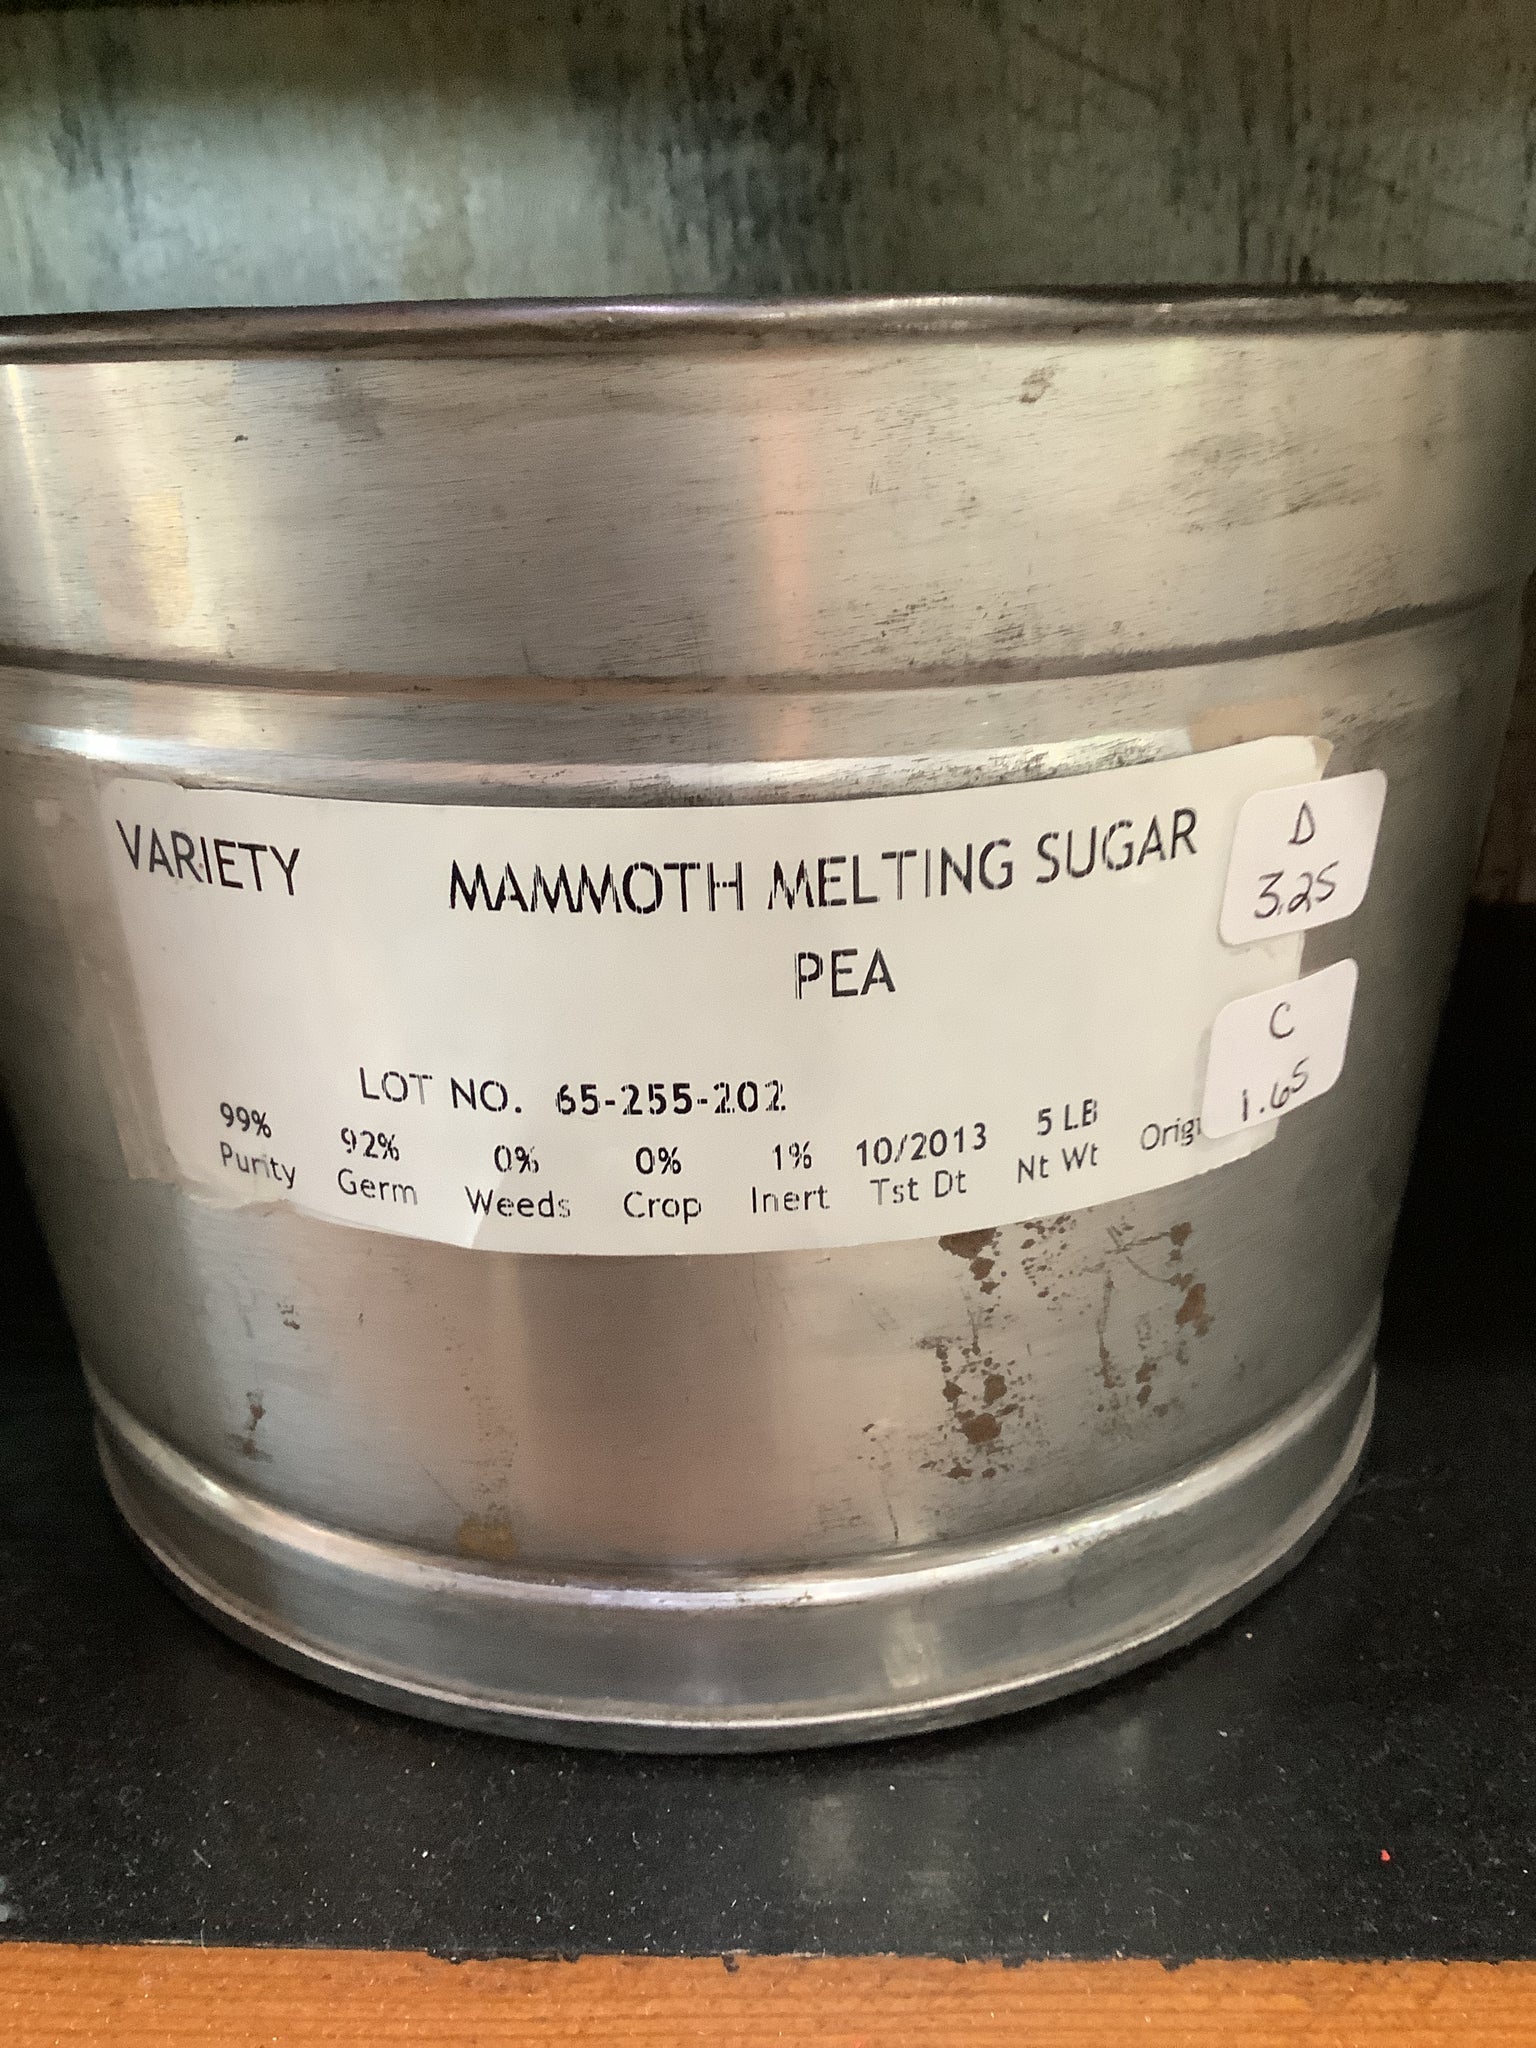 Pea-Mammoth melting sugar